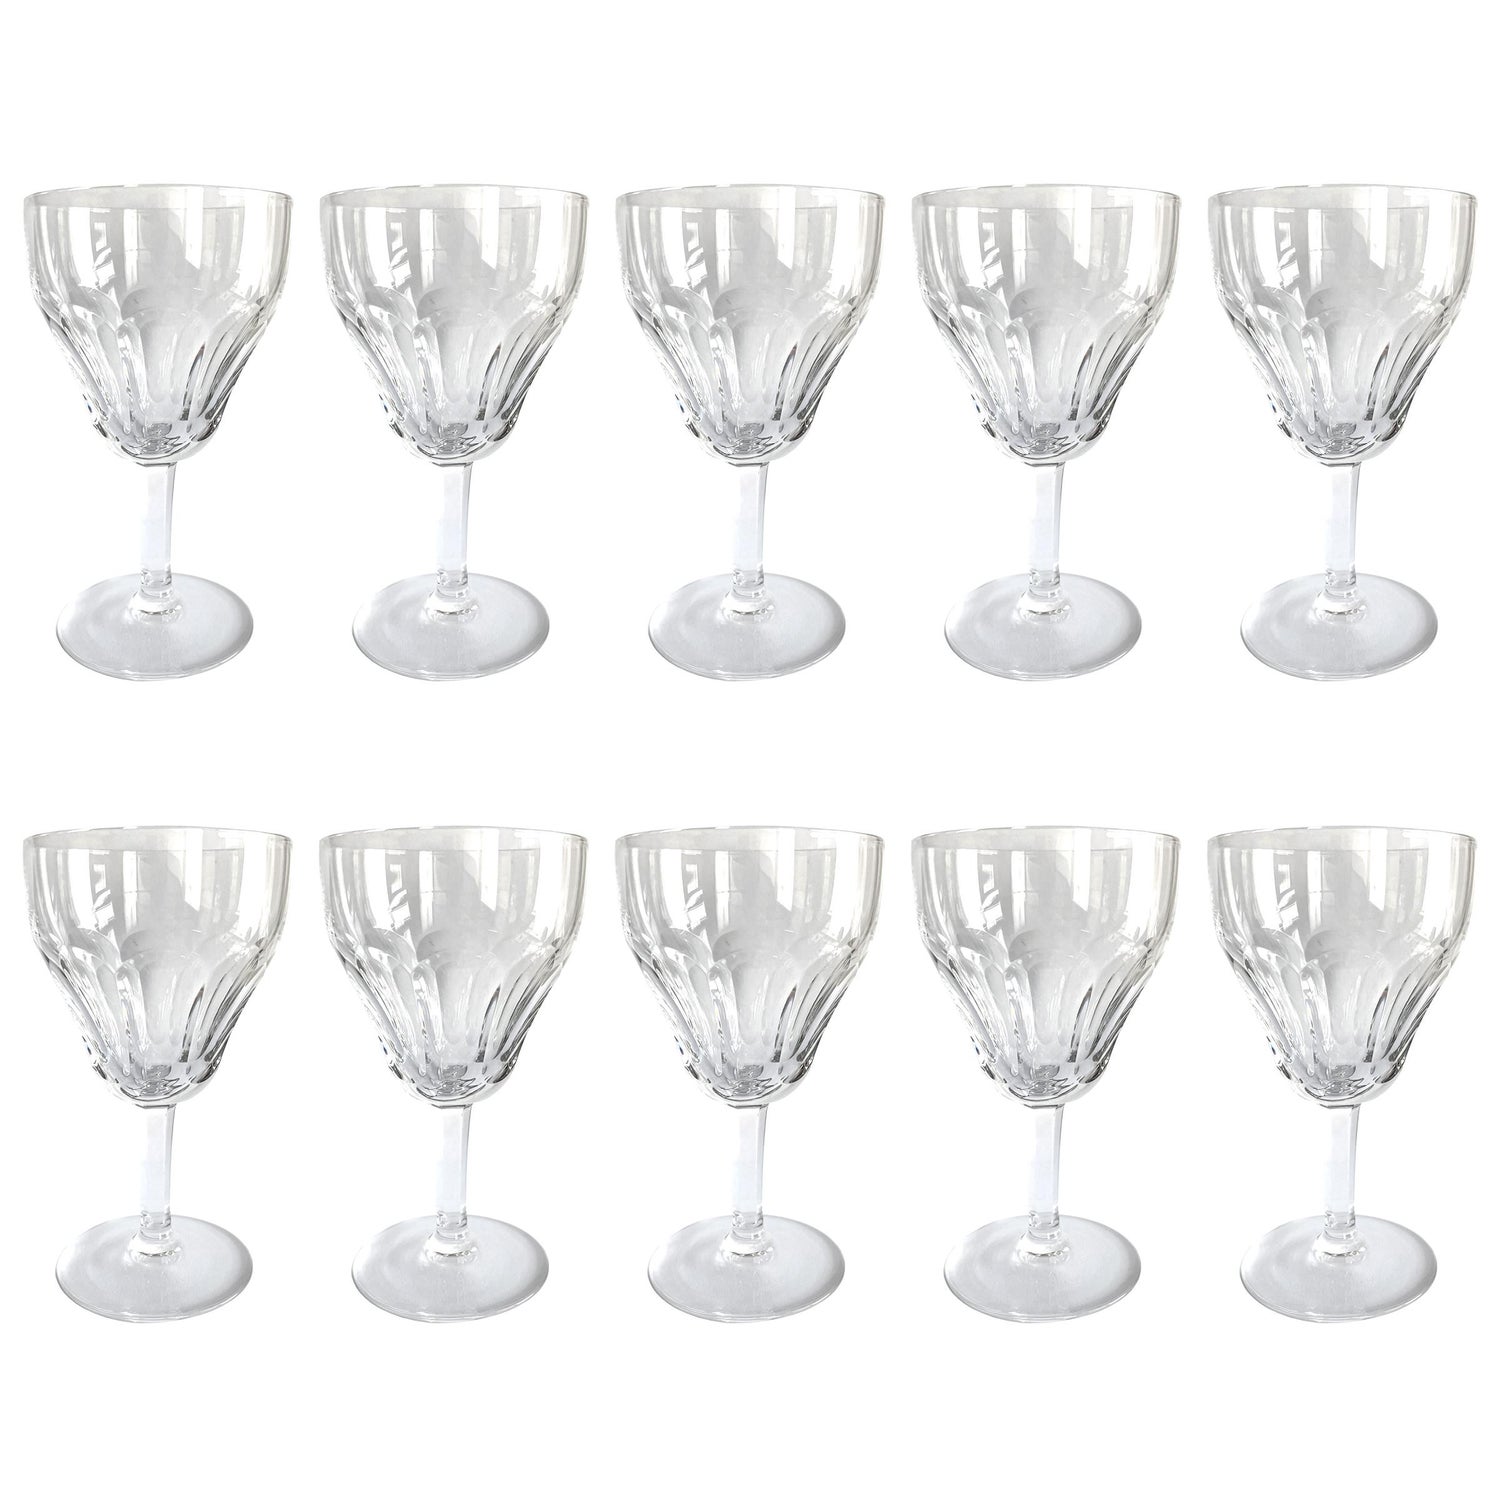 https://a.1stdibscdn.com/set-of-ten-val-saint-lambert-montana-wine-glasses-for-sale/f_37383/f_250037421629674228790/Set_of_Ten_master.jpg?width=1500